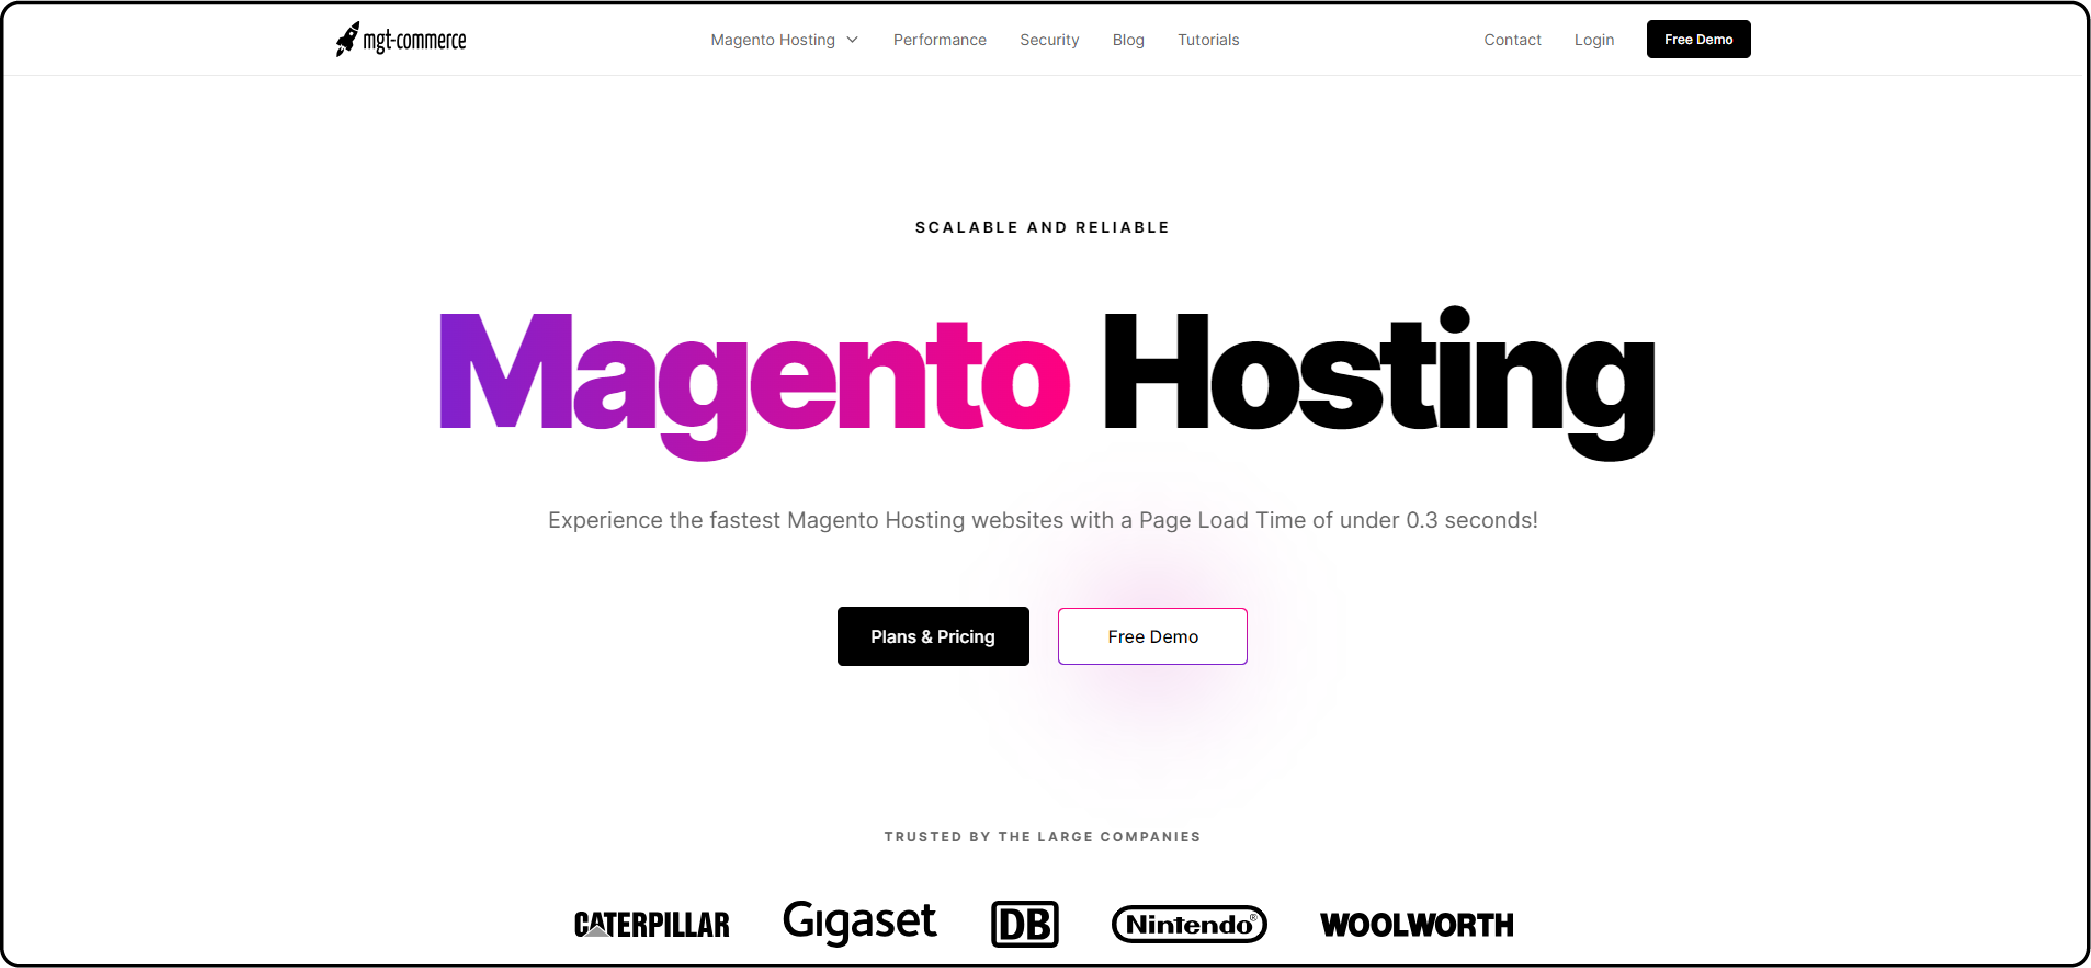 MGT-Commerce Adobe Magento Hosting